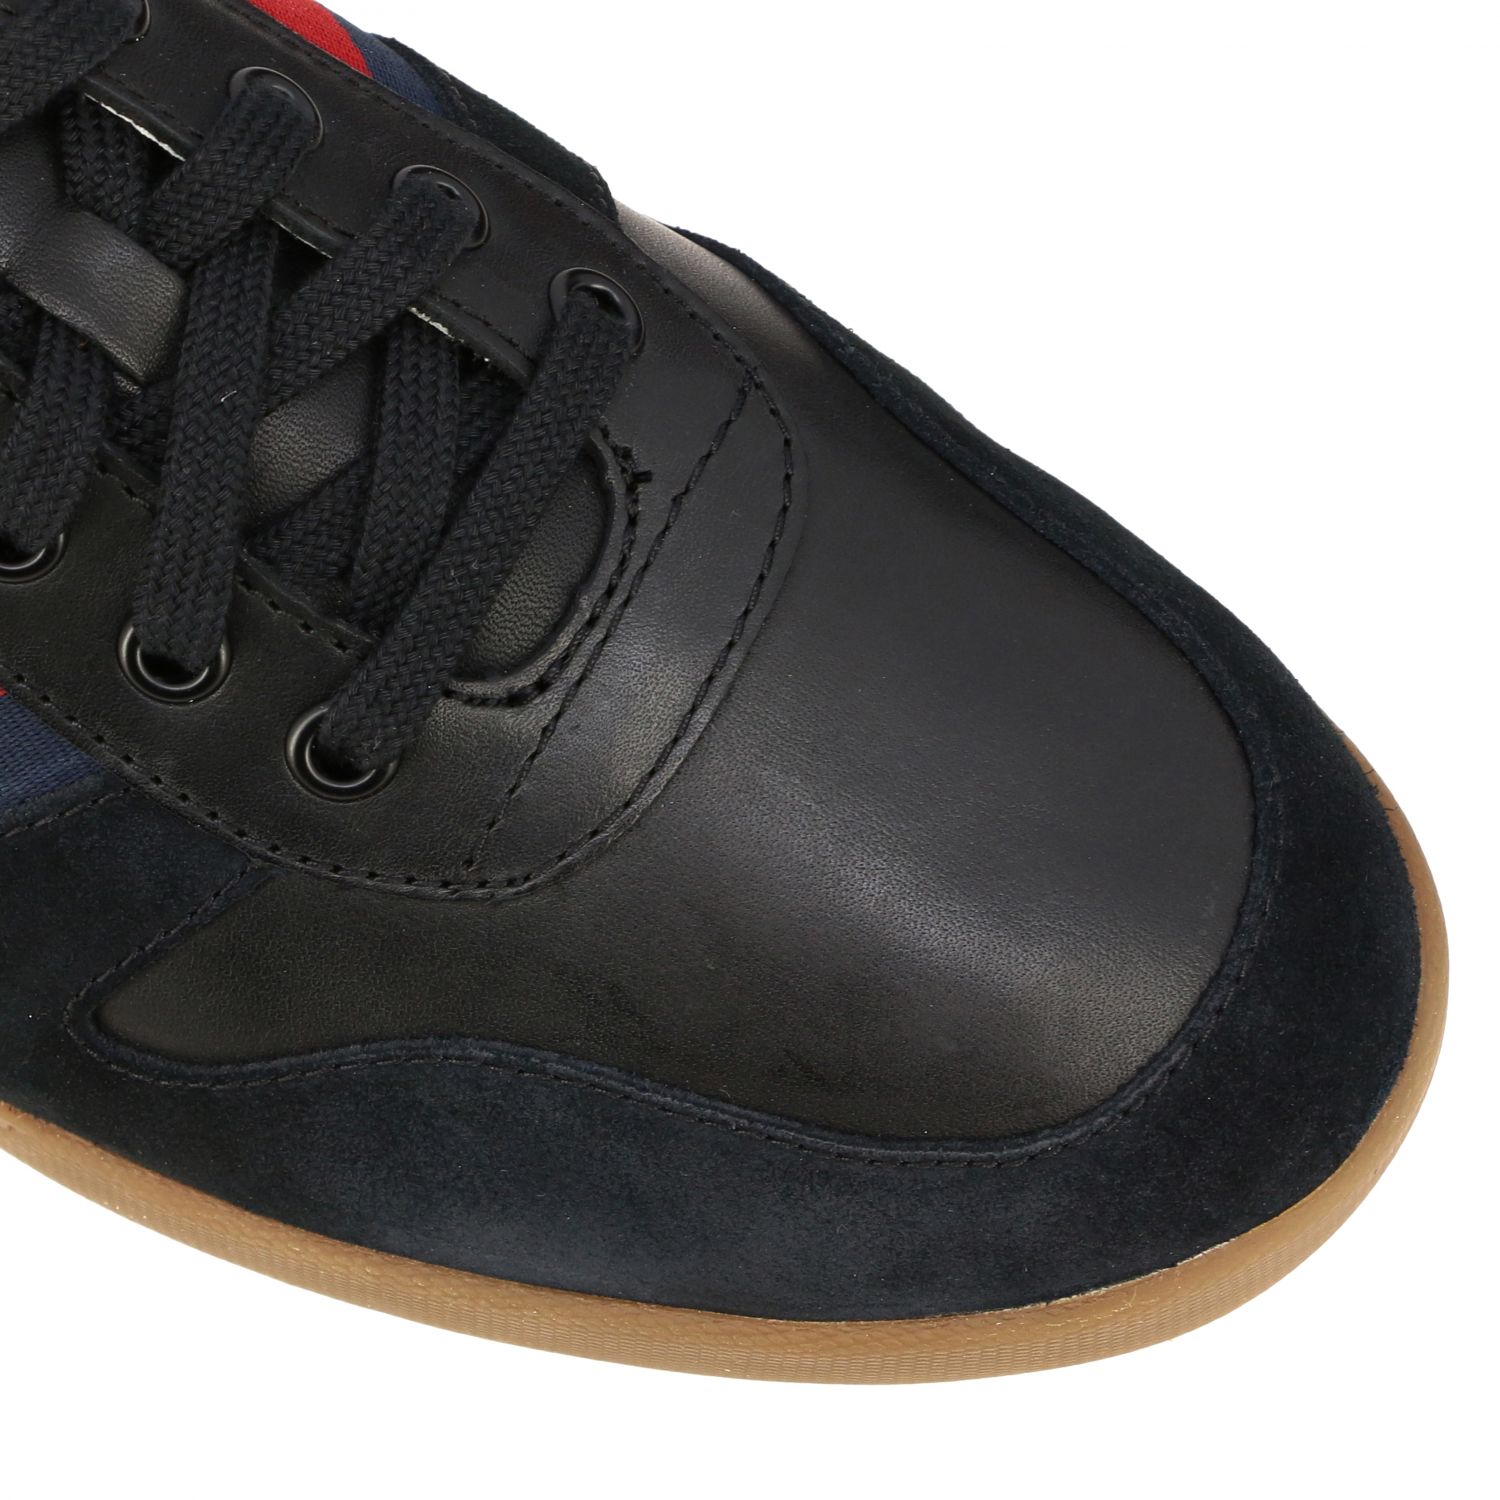 Polo Ralph Lauren Outlet: Shoes men | Sneakers Polo Ralph Lauren Men ...